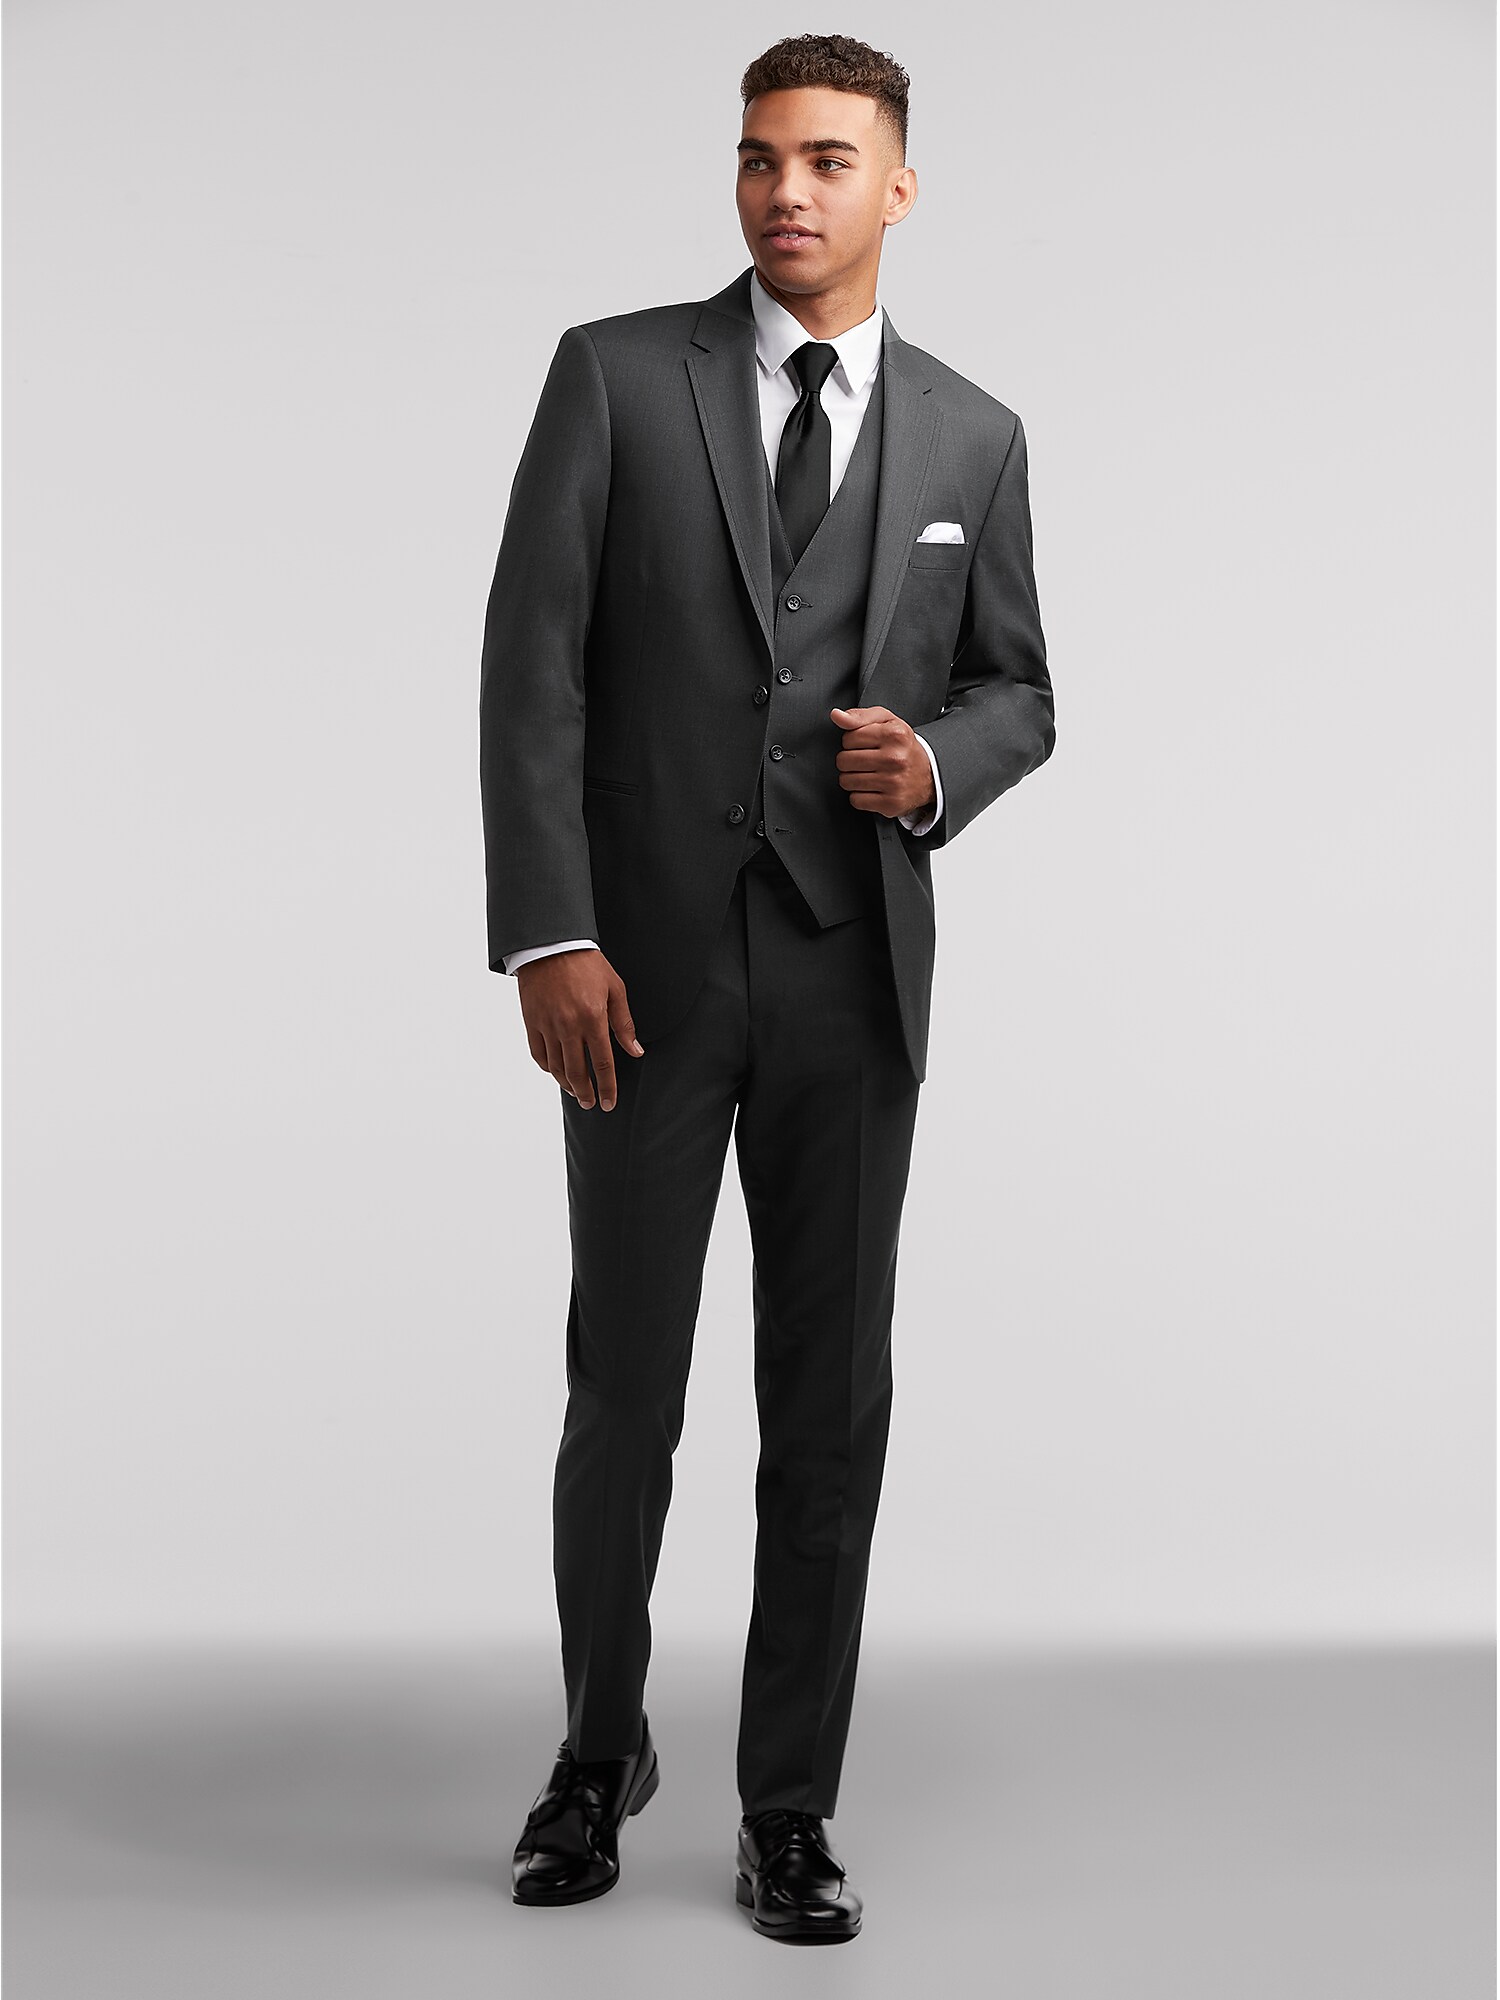 Performance Gray Suit by Calvin Klein | Suit Rental